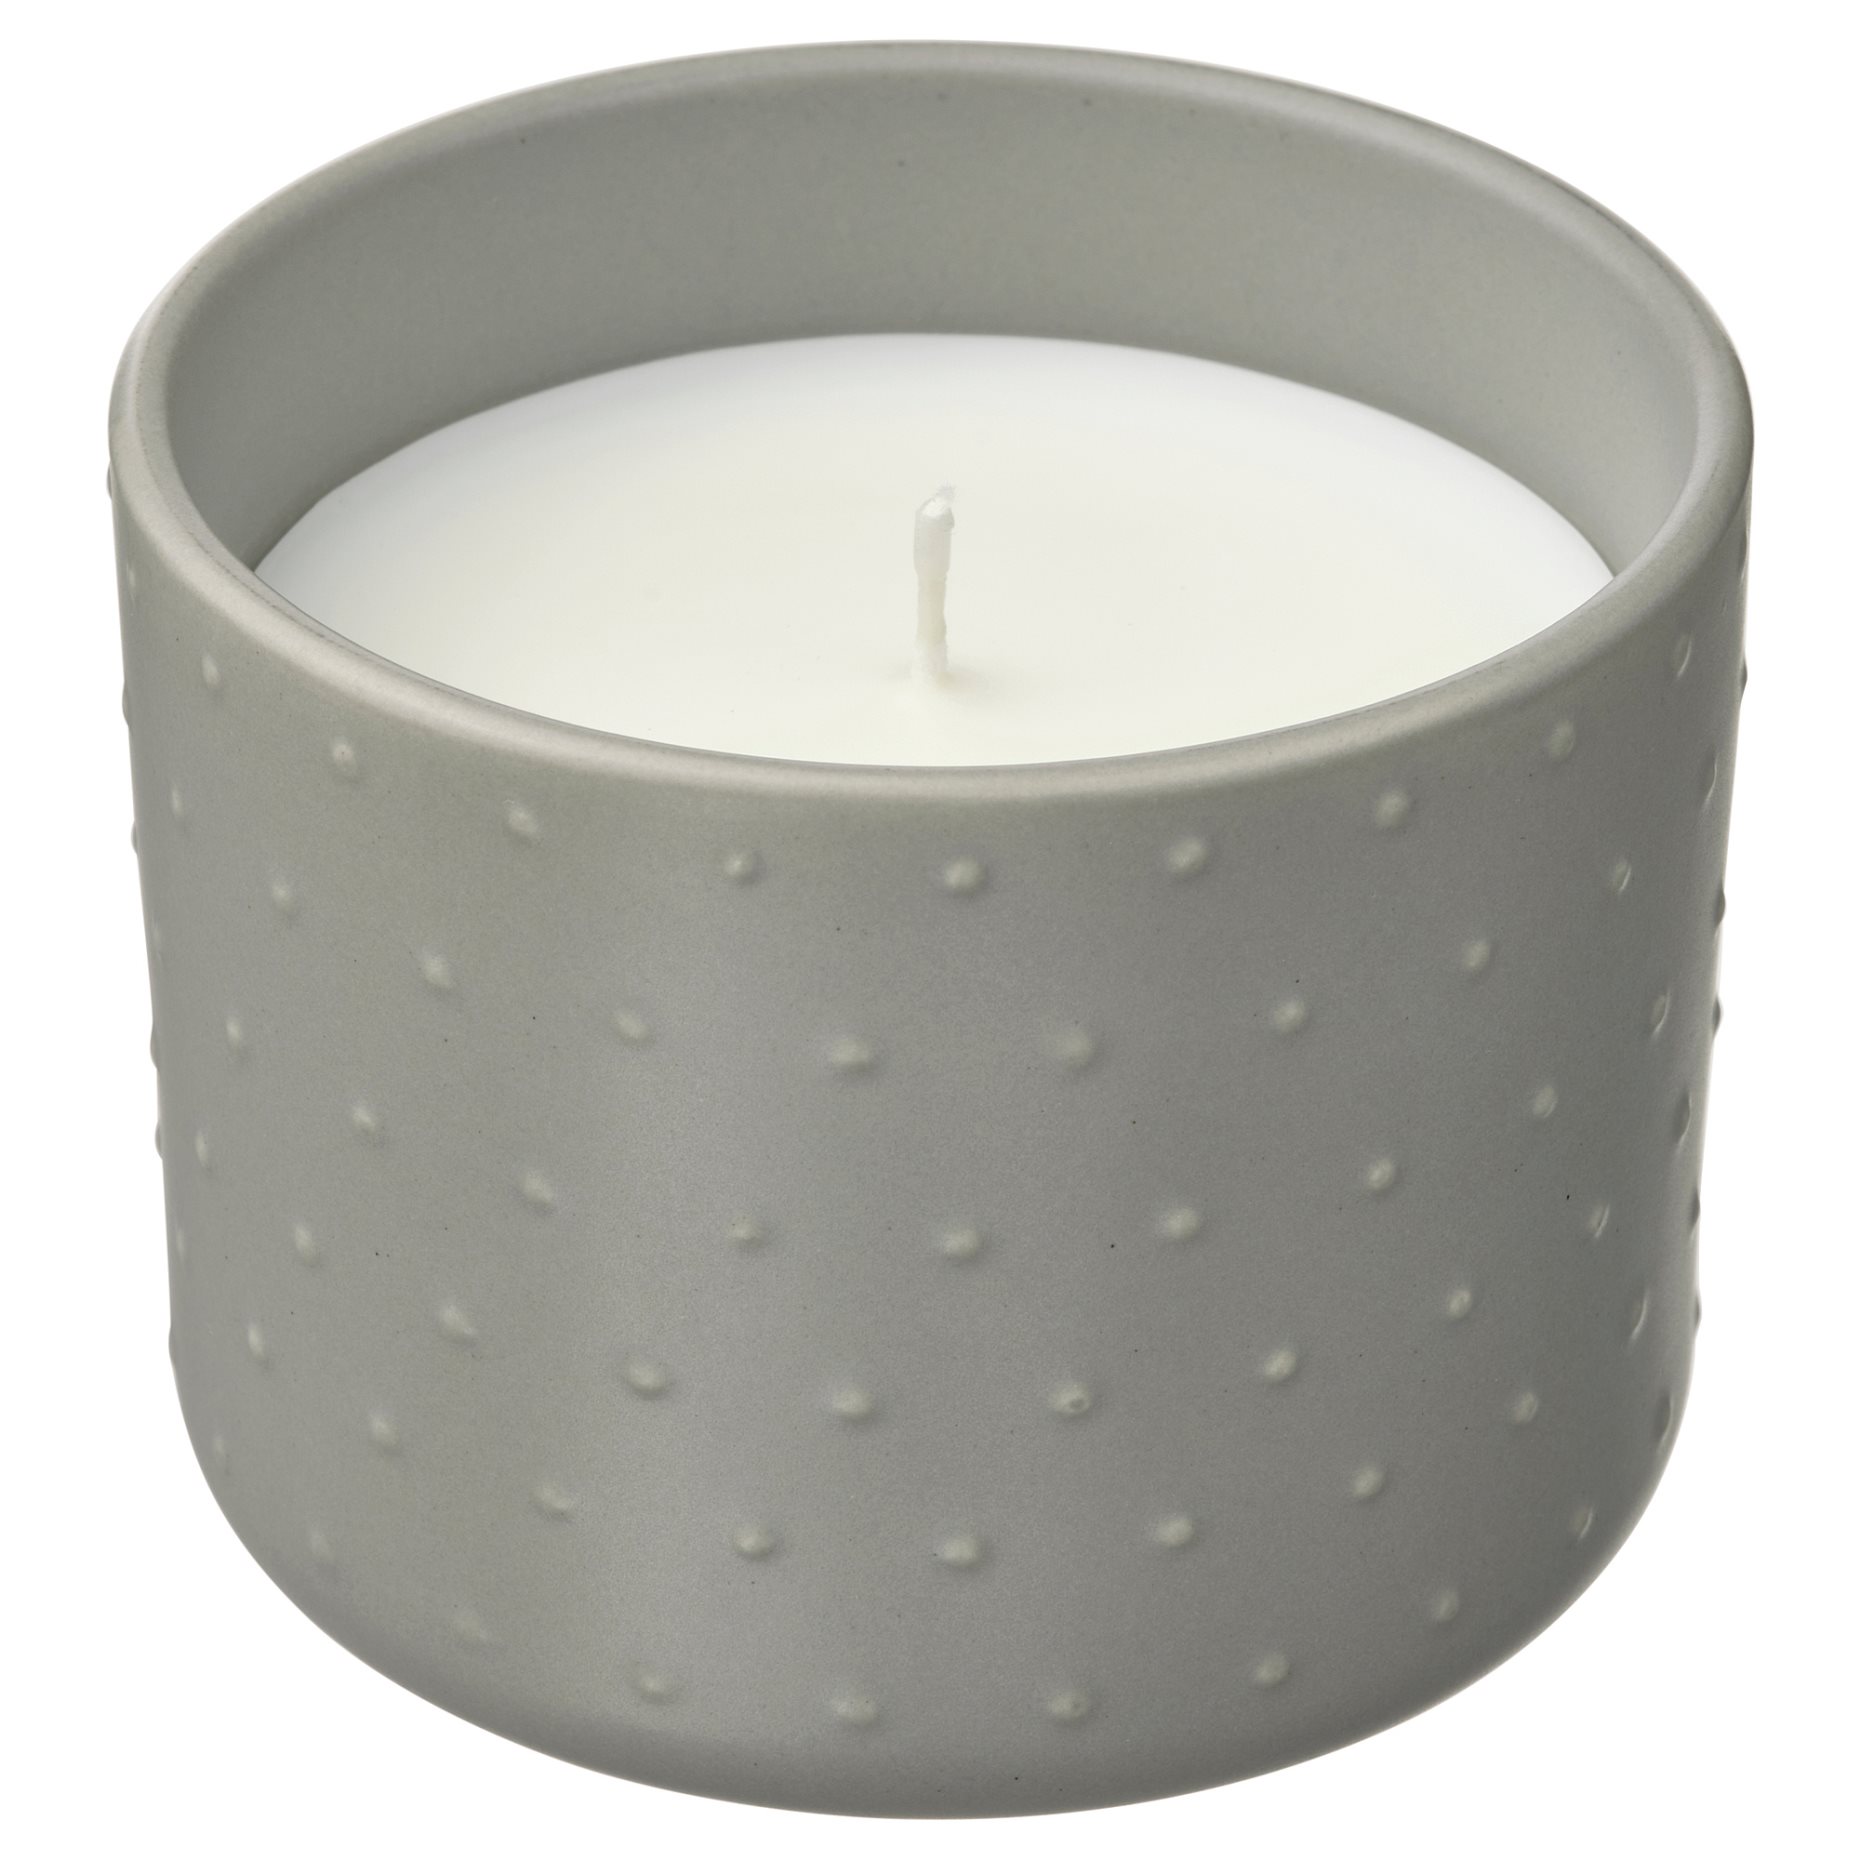 GLASBJÖRK, scented candle in ceramic jar/Cedarwood & vanilla, 25 hr, 805.336.26